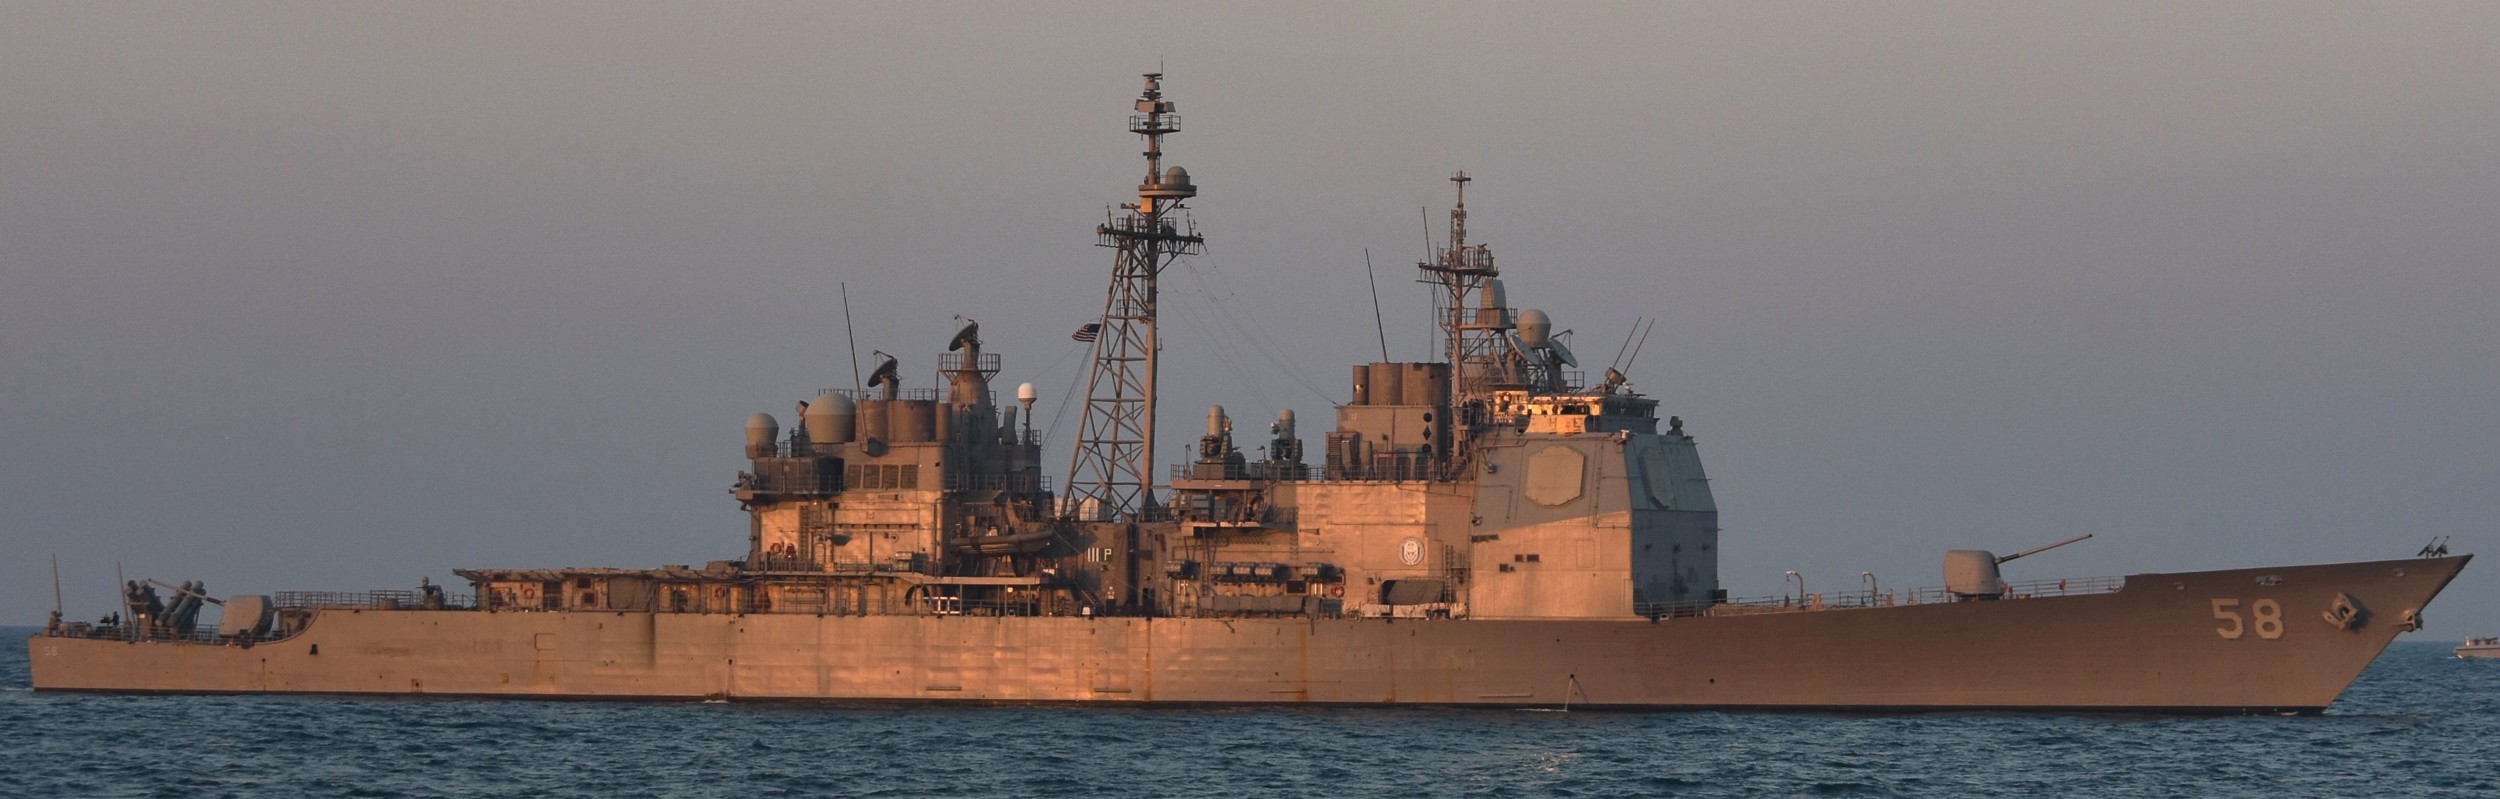 cg-58 uss philippine sea ticonderoga class guided missile cruiser aegis us navy arabian gulf 65